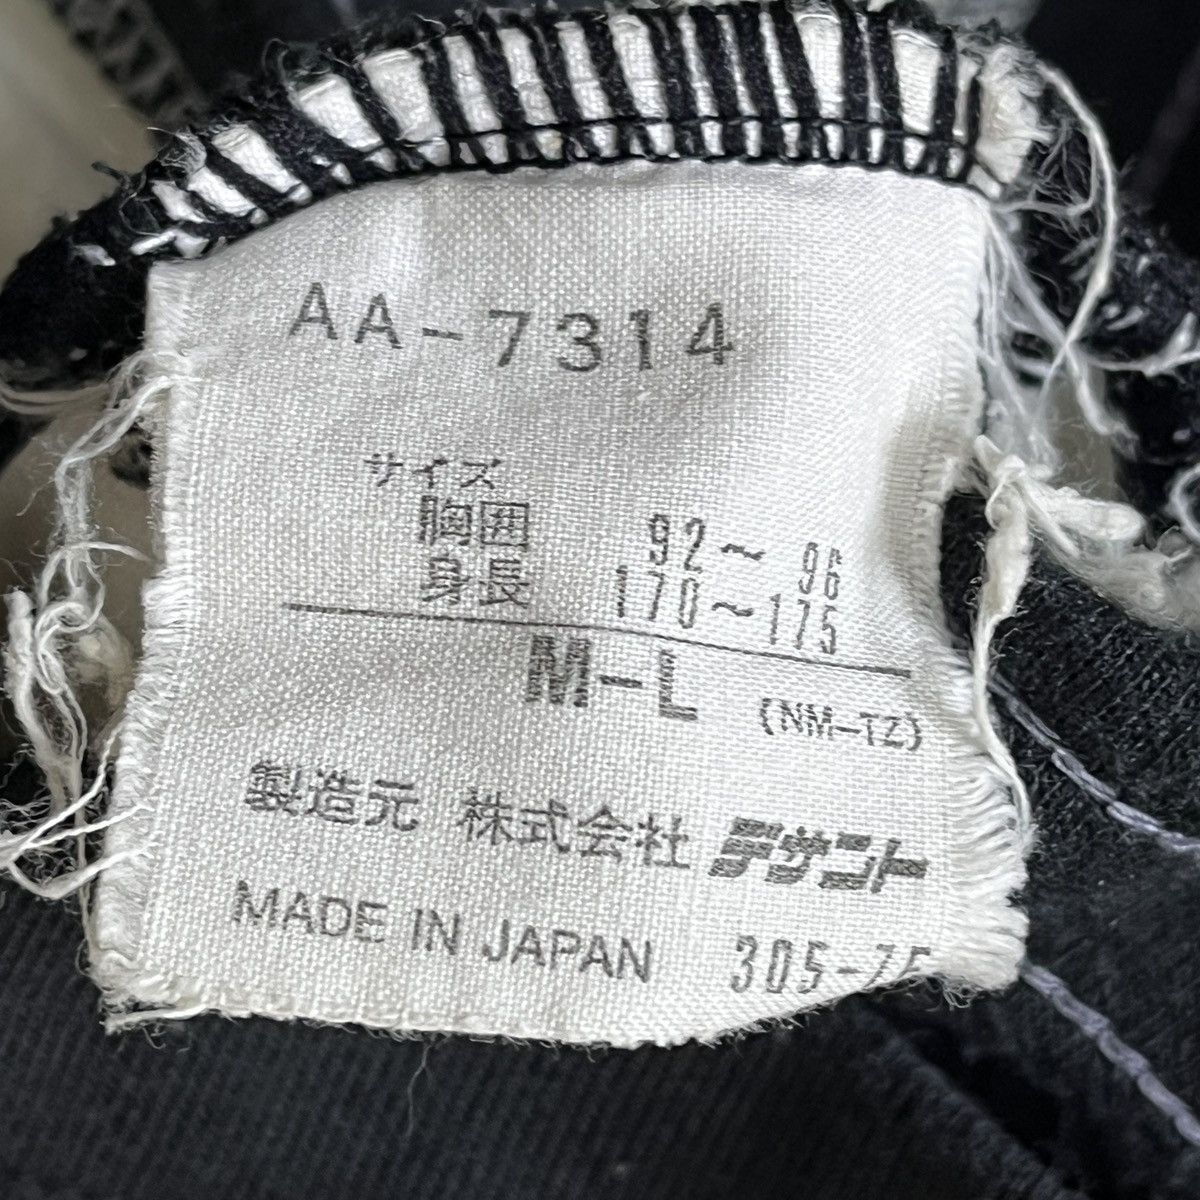 Super Rare Vintage Adidas 3 Stripes Descente Made In Japan - 18